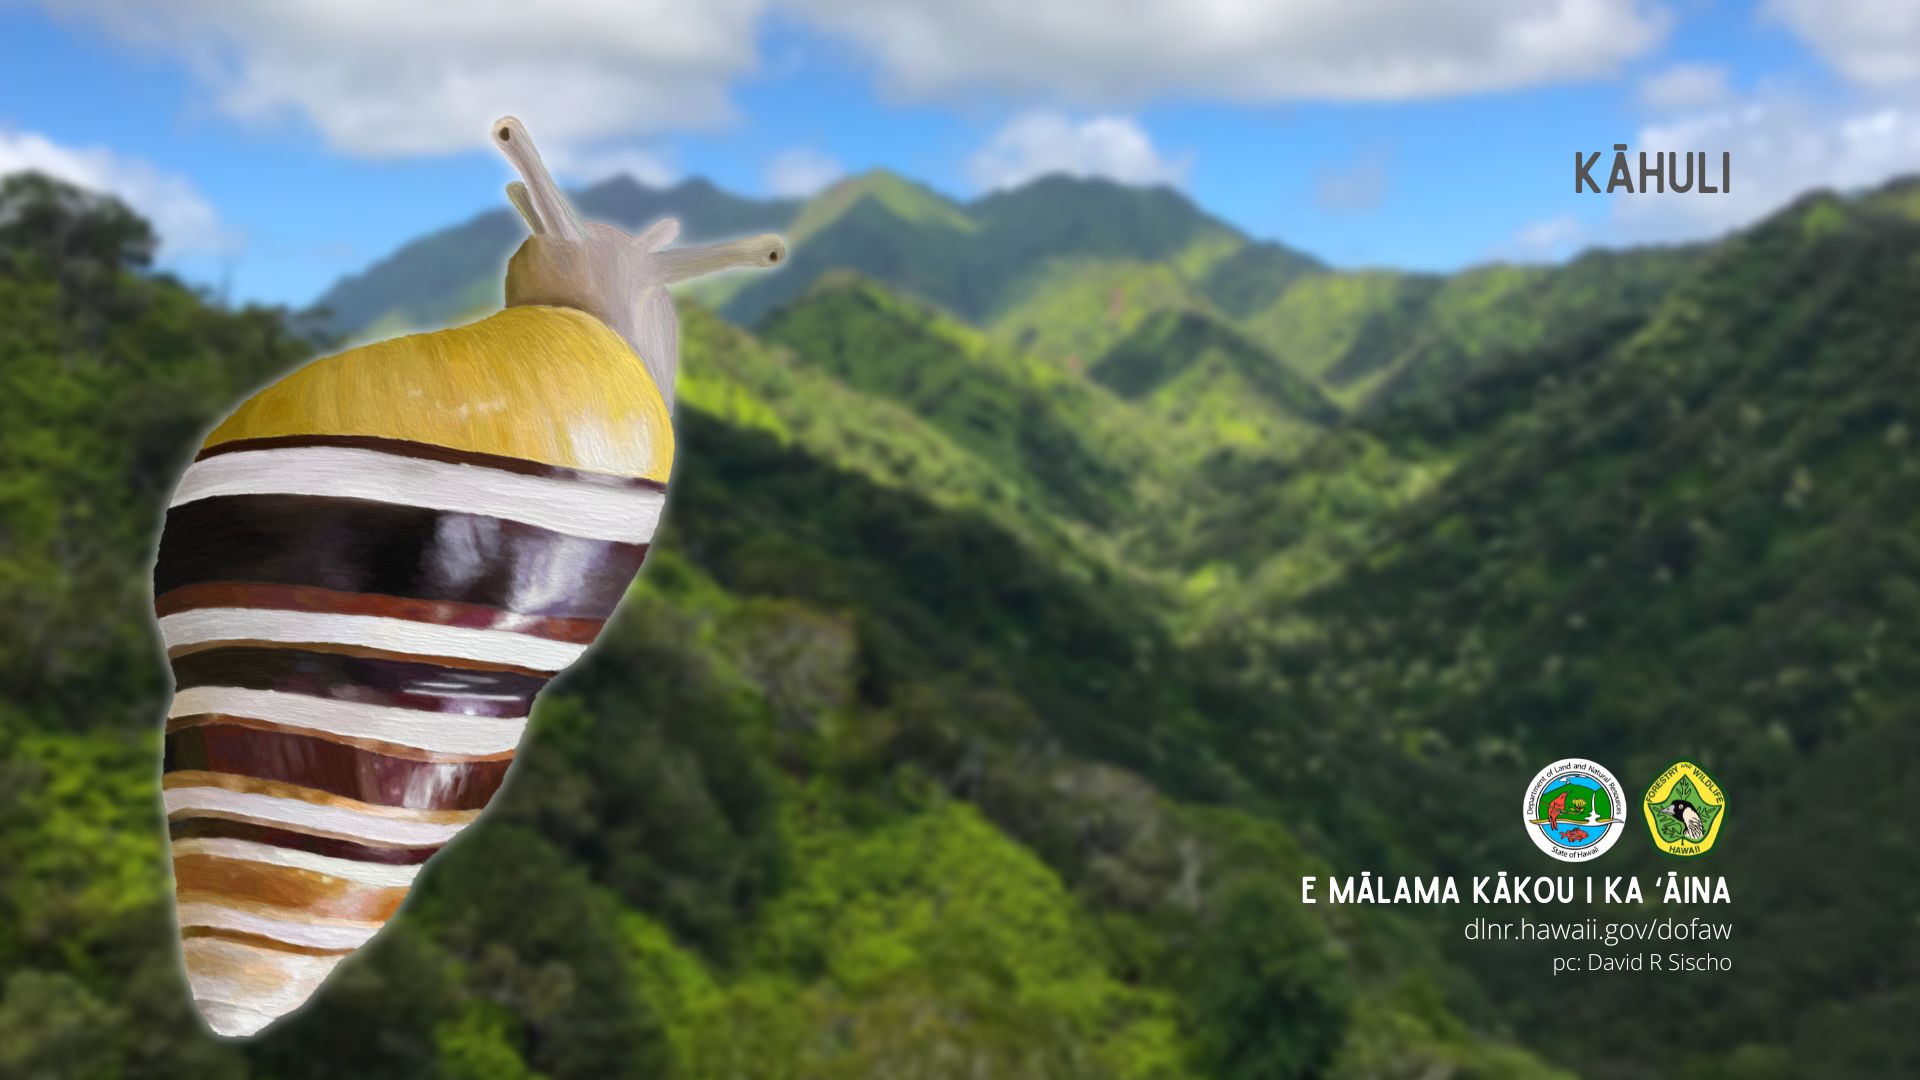 A kāhuli tree snail background image